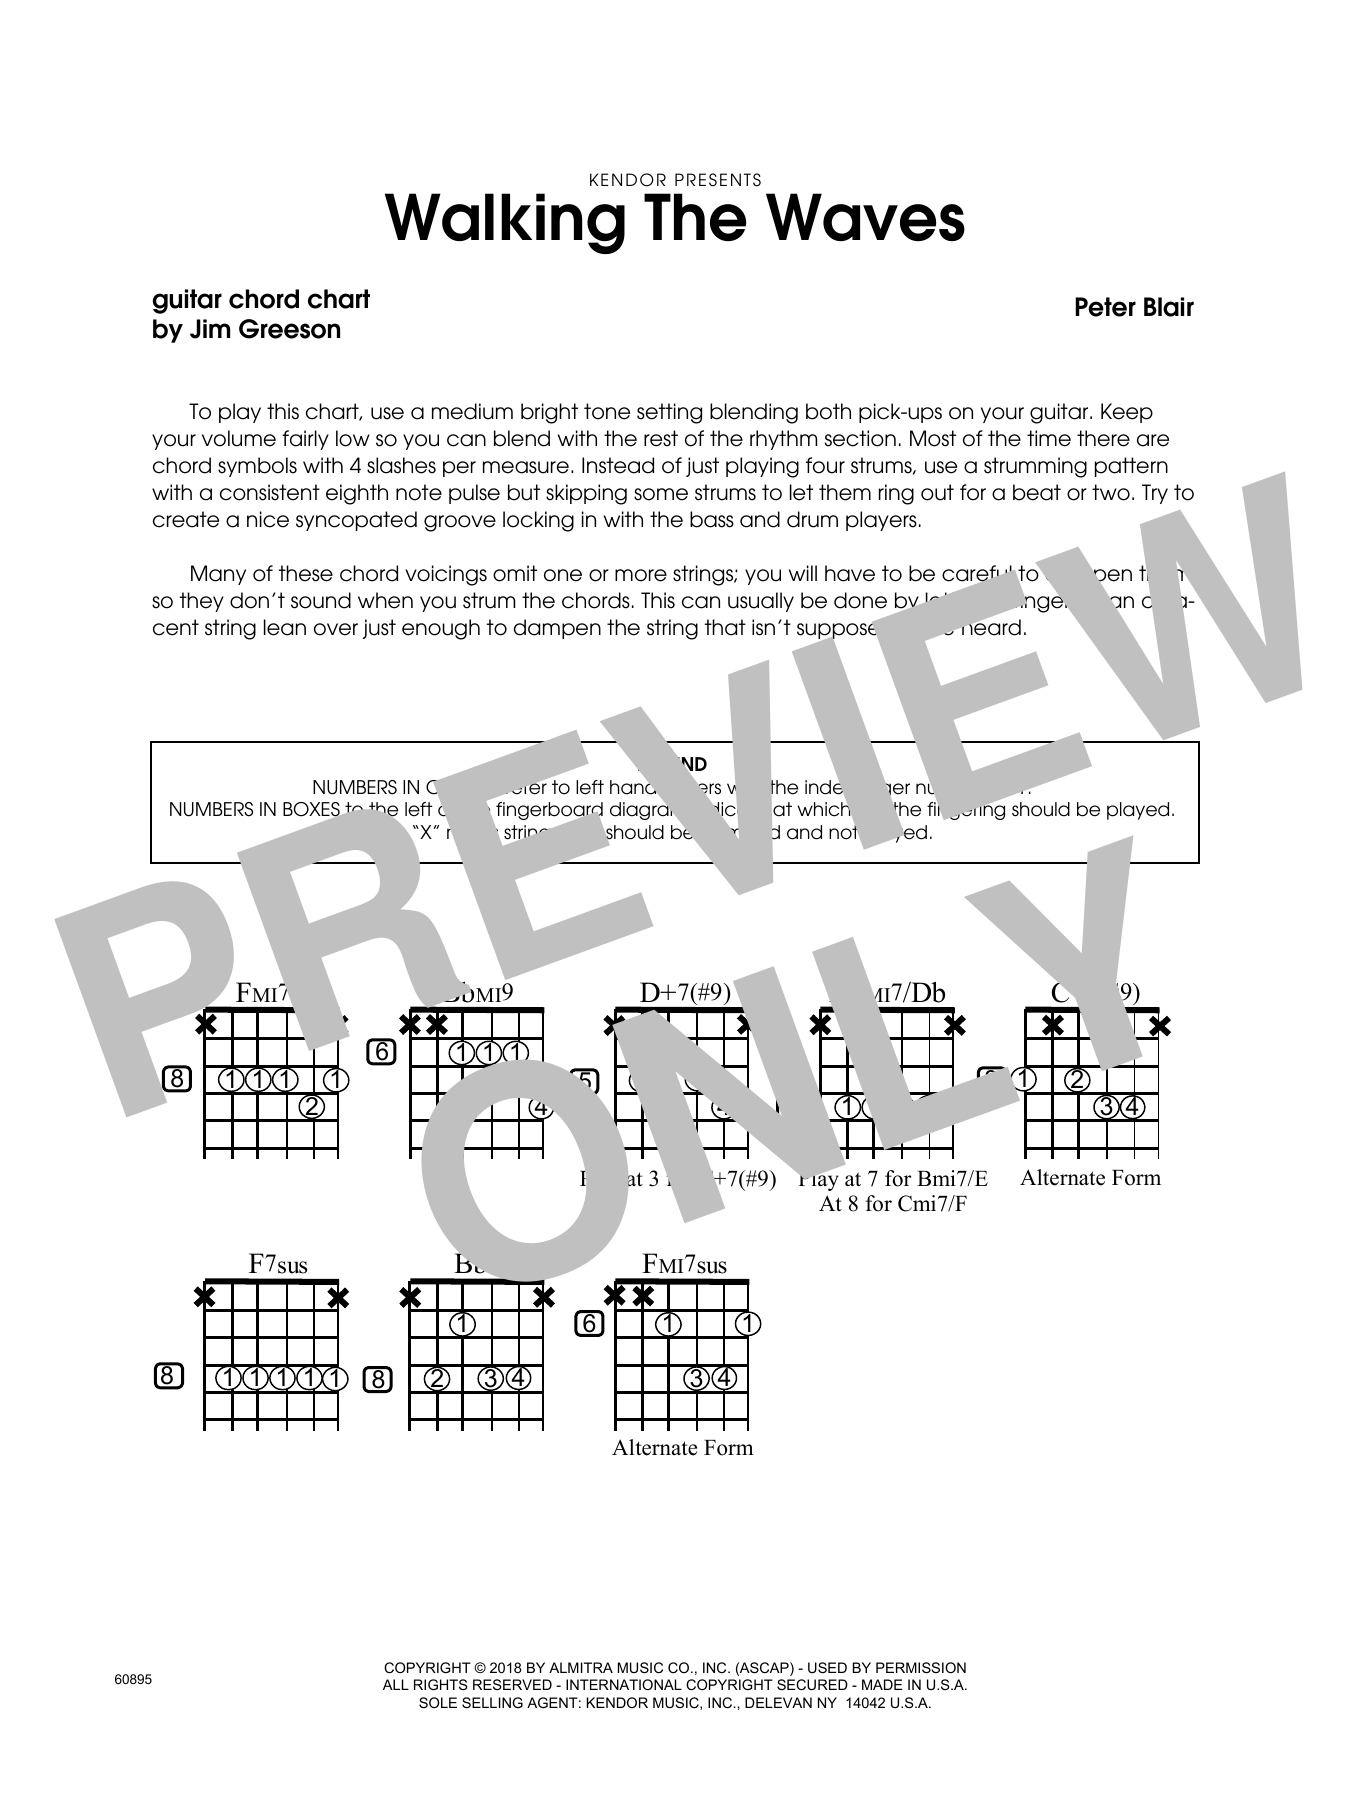 Download Peter Blair Walking The Waves - Guitar Chord Chart Sheet Music